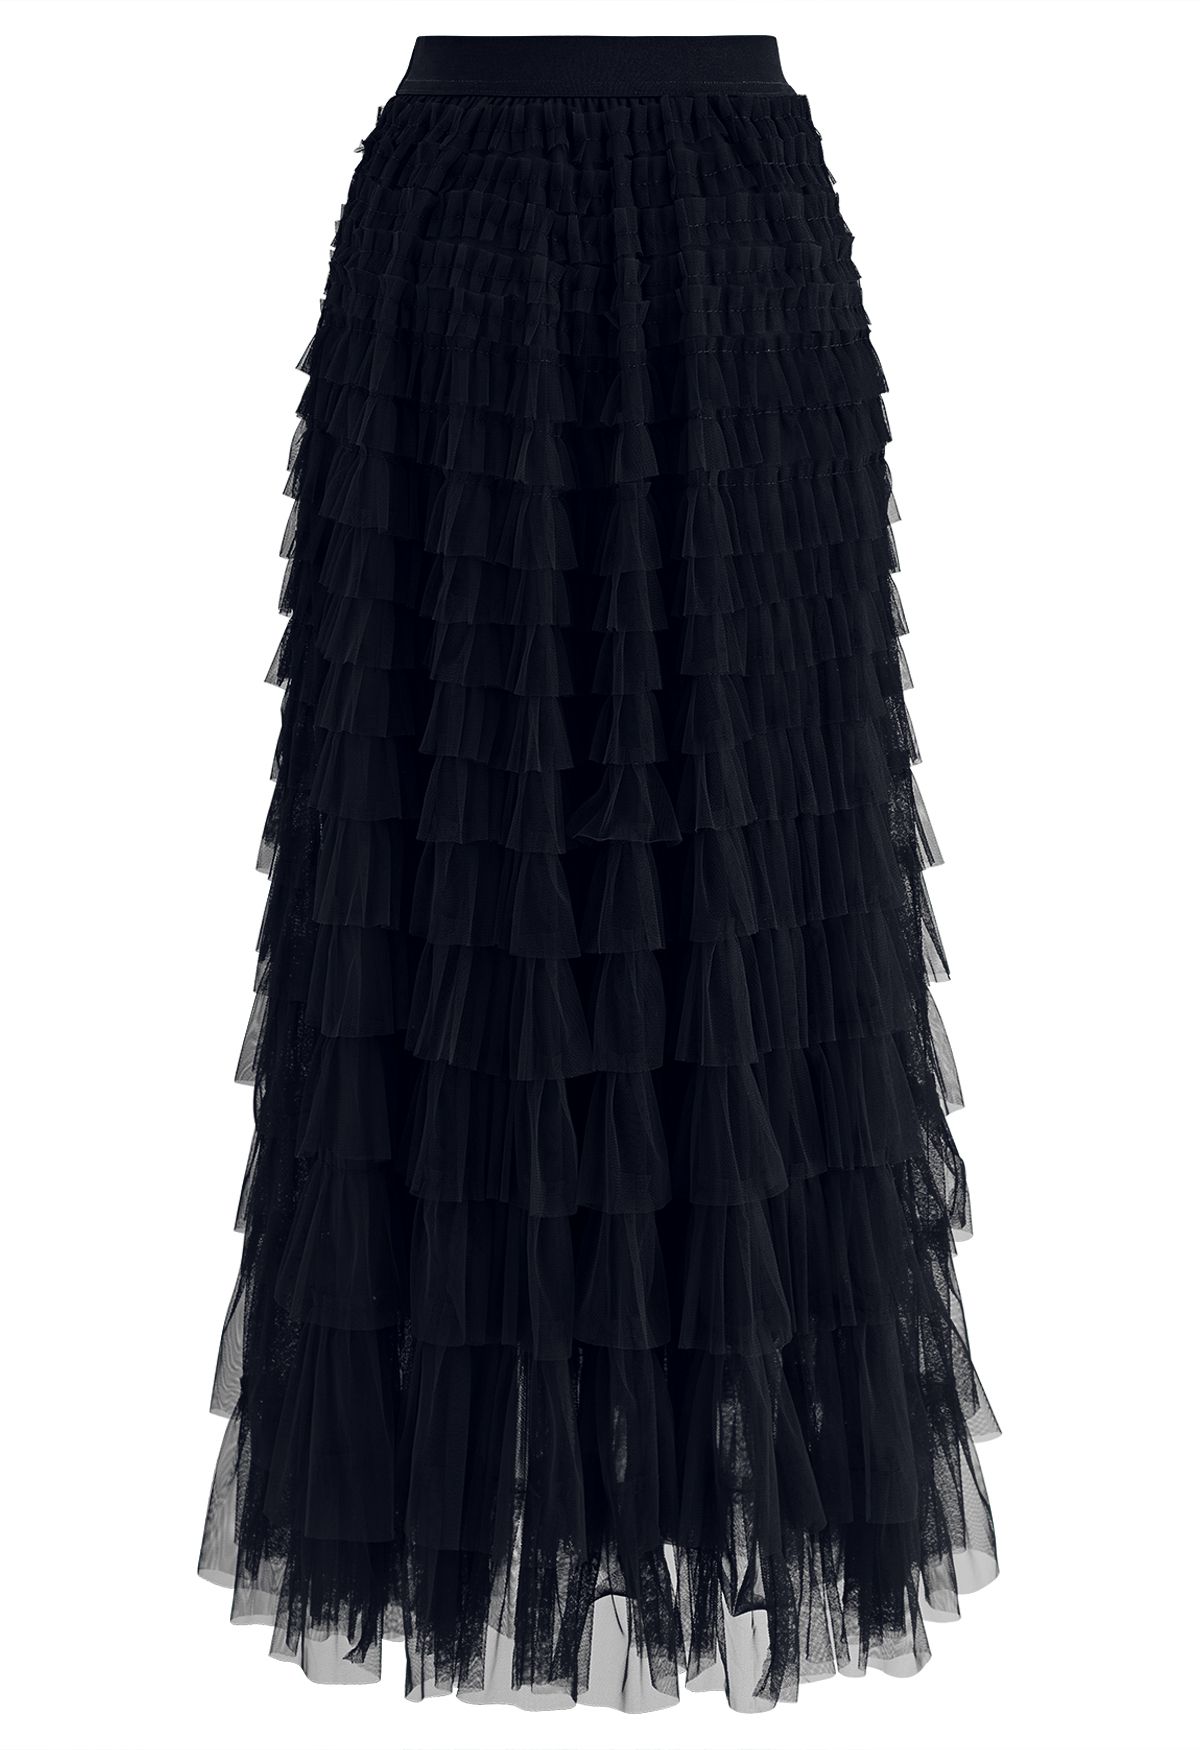 Swan Cloud Midi Skirt in Black - Retro, Indie and Unique Fashion